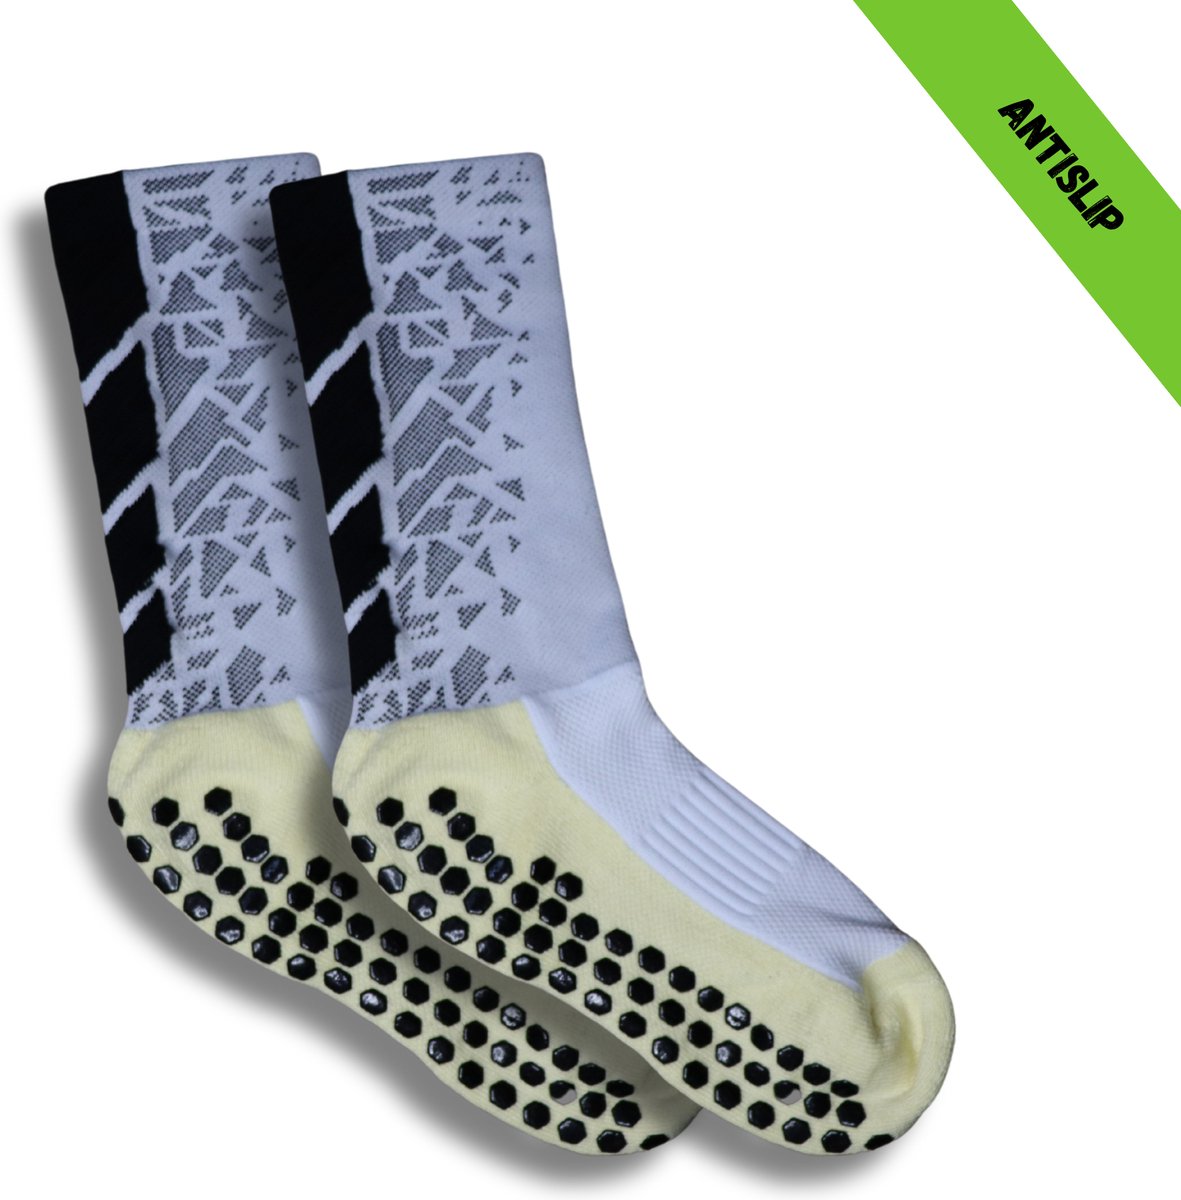 Gripsokken - Sportsokken - Gripsokken Voetbal - Gripsokken Voetbal Wit - Grip Socks - Pilates Sokken - Yoga Sokken - Anti Blaren - One Size - Compressie